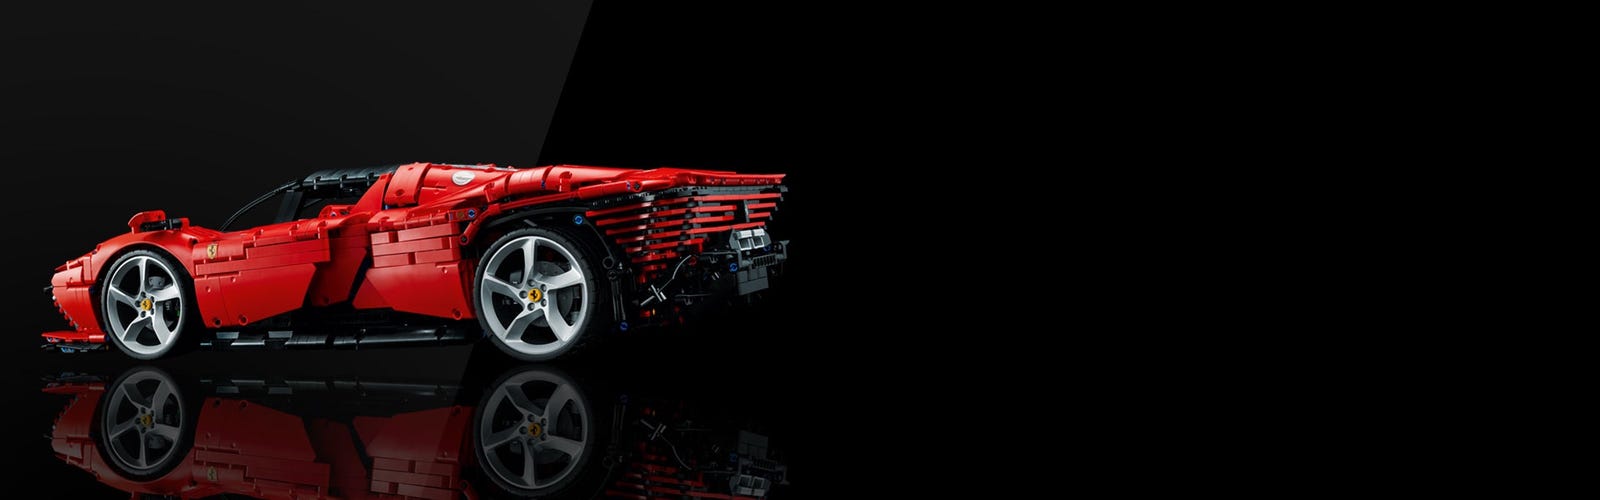 LEGO Technic - 42143 Ferrari Daytona SP3 - Playpolis